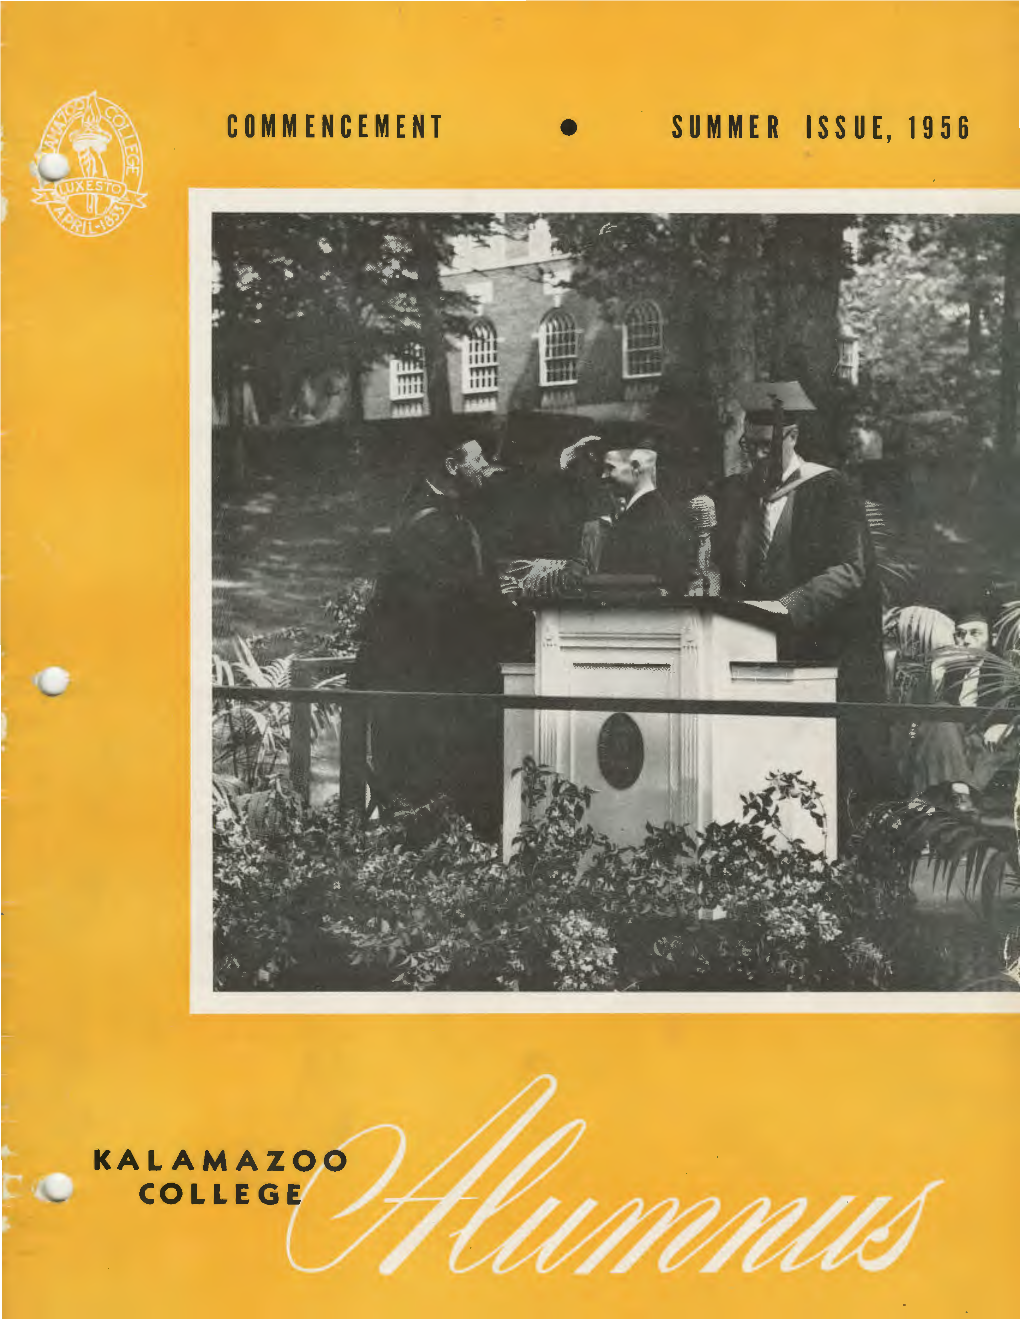 Kalamazoo College Alumnus (Summer, 1956)